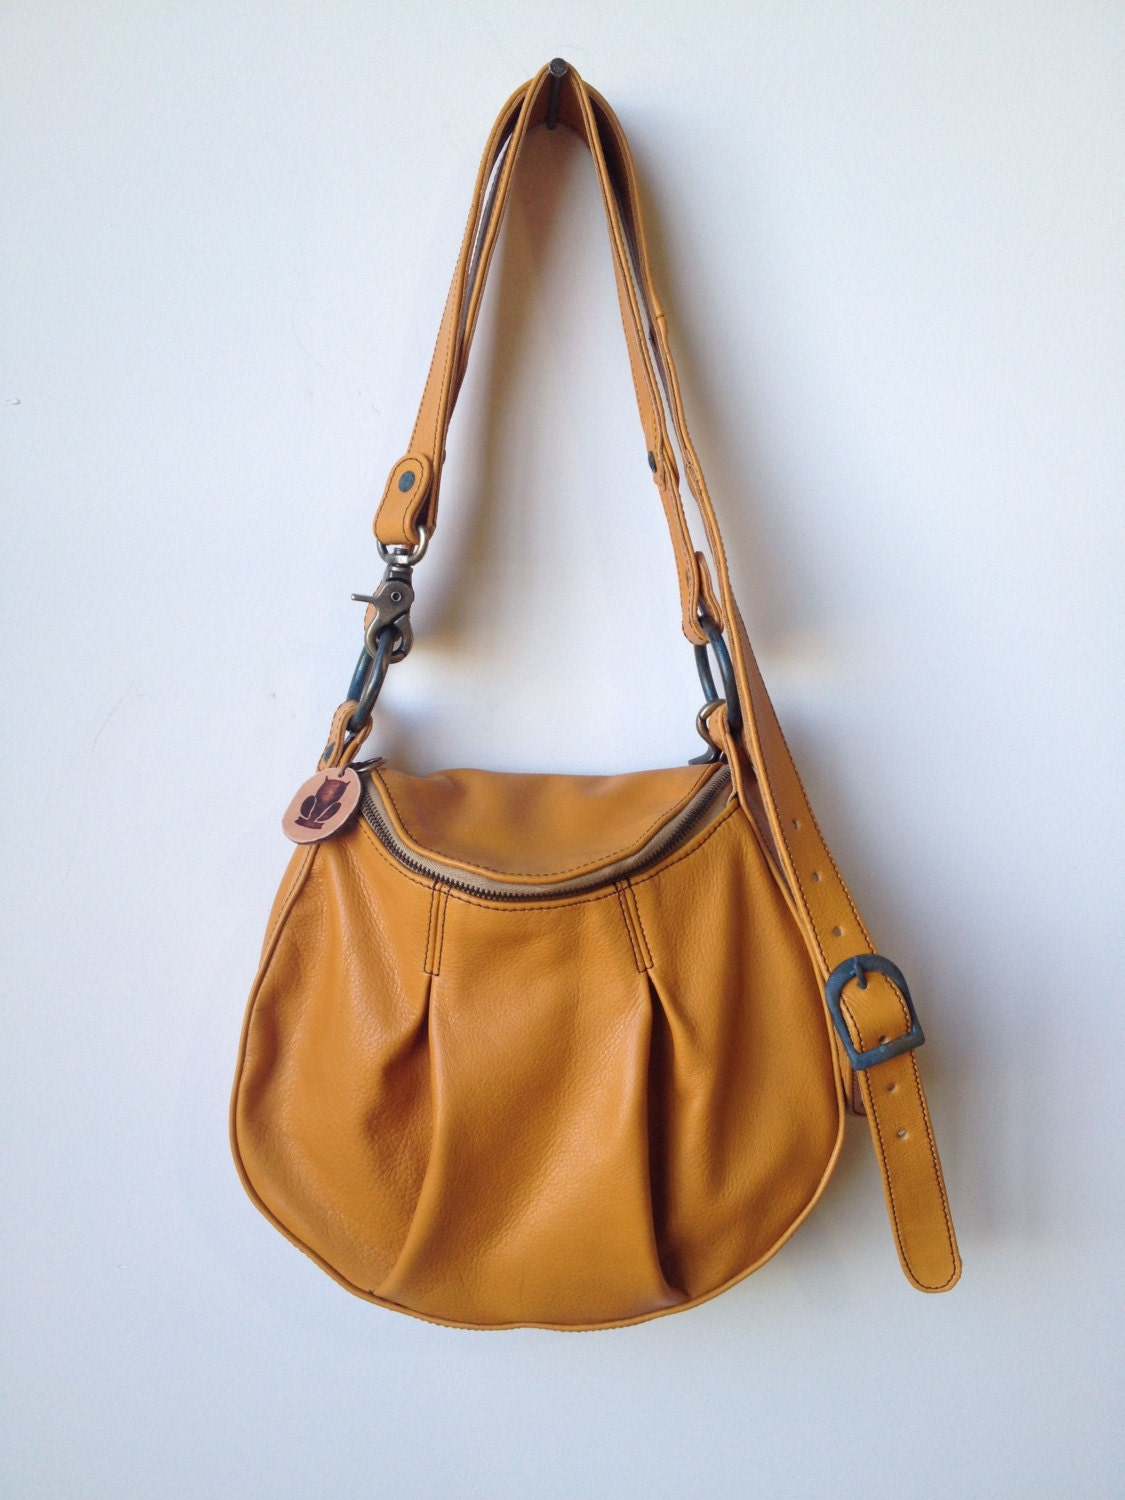 Mustard handbag leather